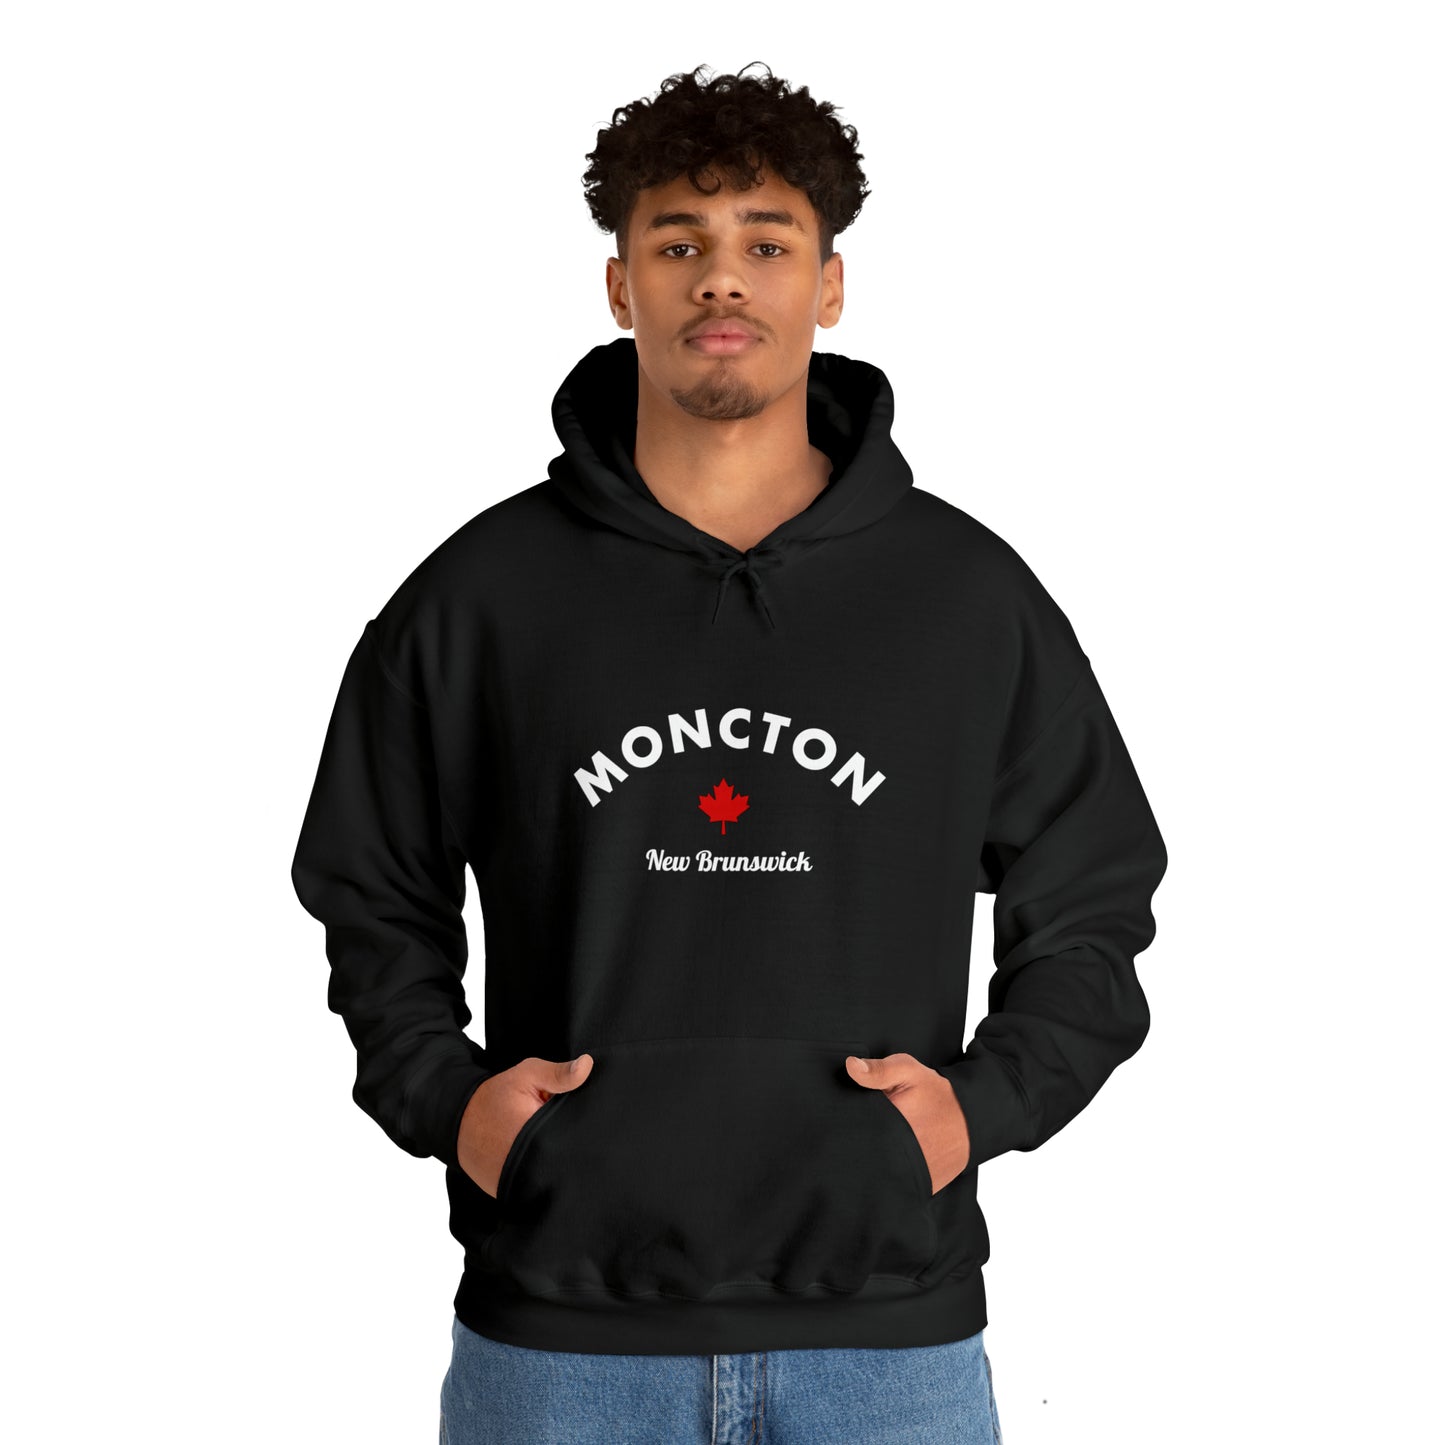   Moncton Hoodie from HoodySZN.com